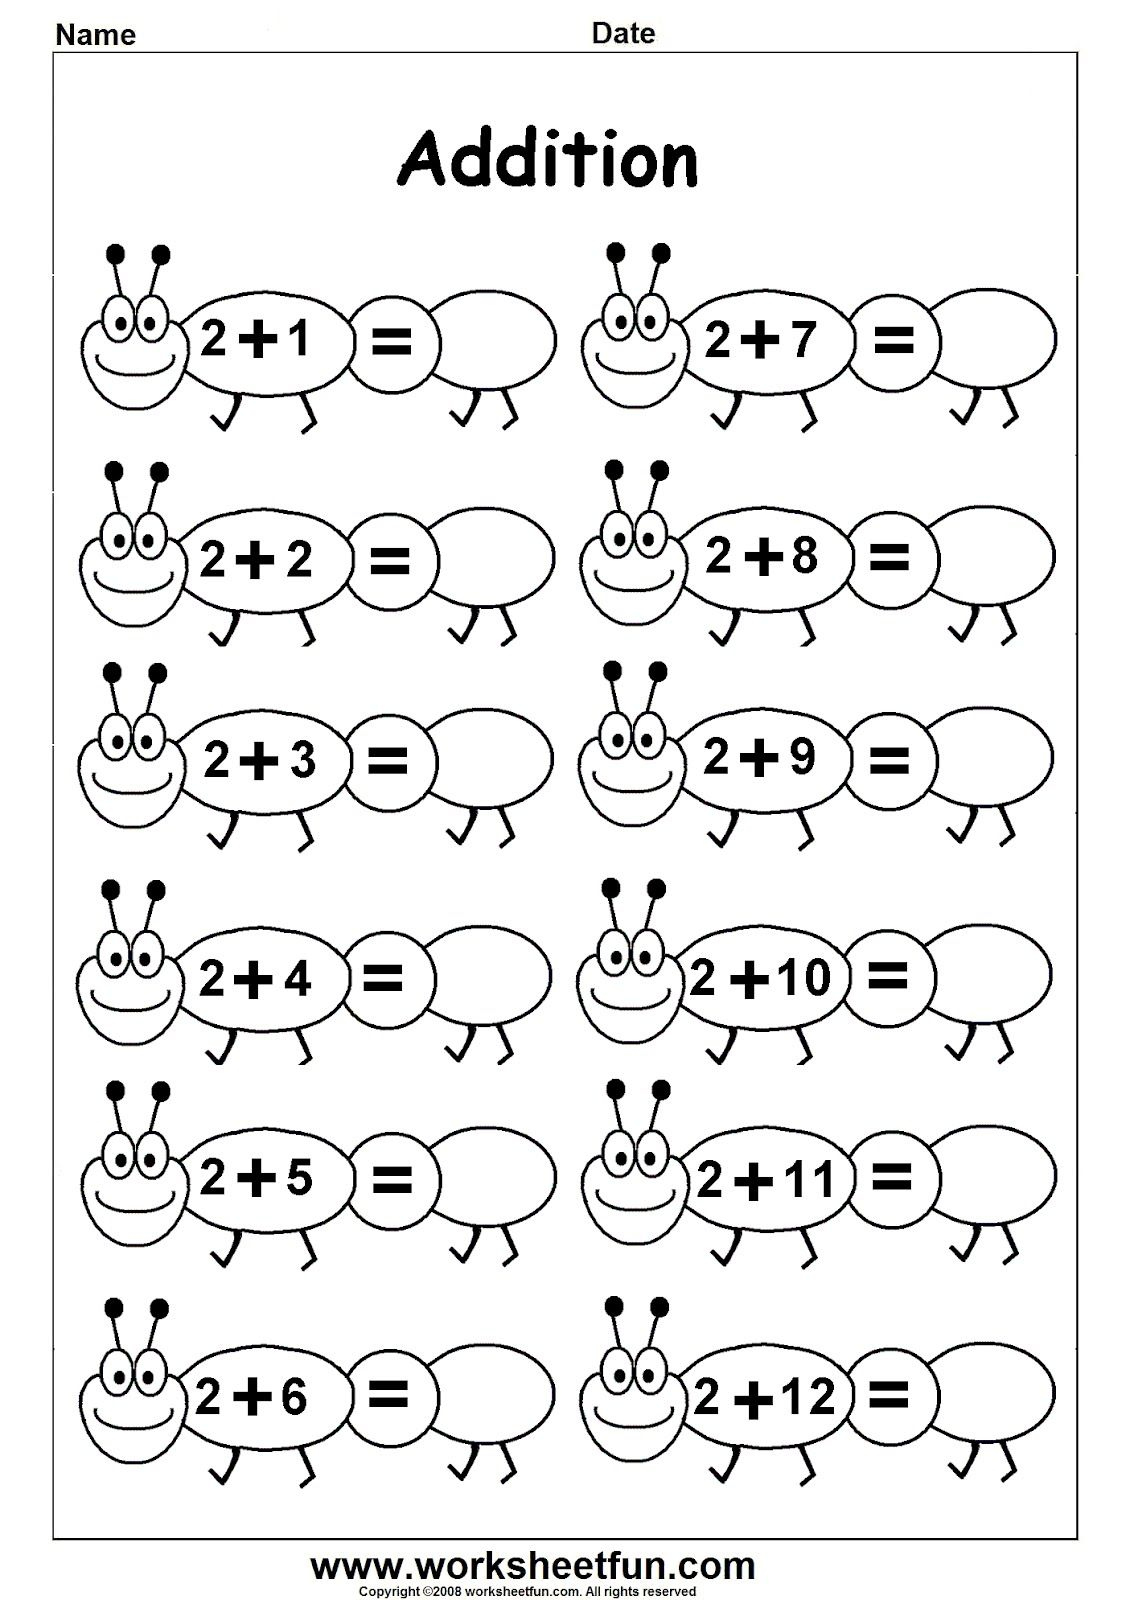 Worksheetfun - Free Printable Worksheets regarding Free Printable Kindergarten Addition and Subtraction Worksheets